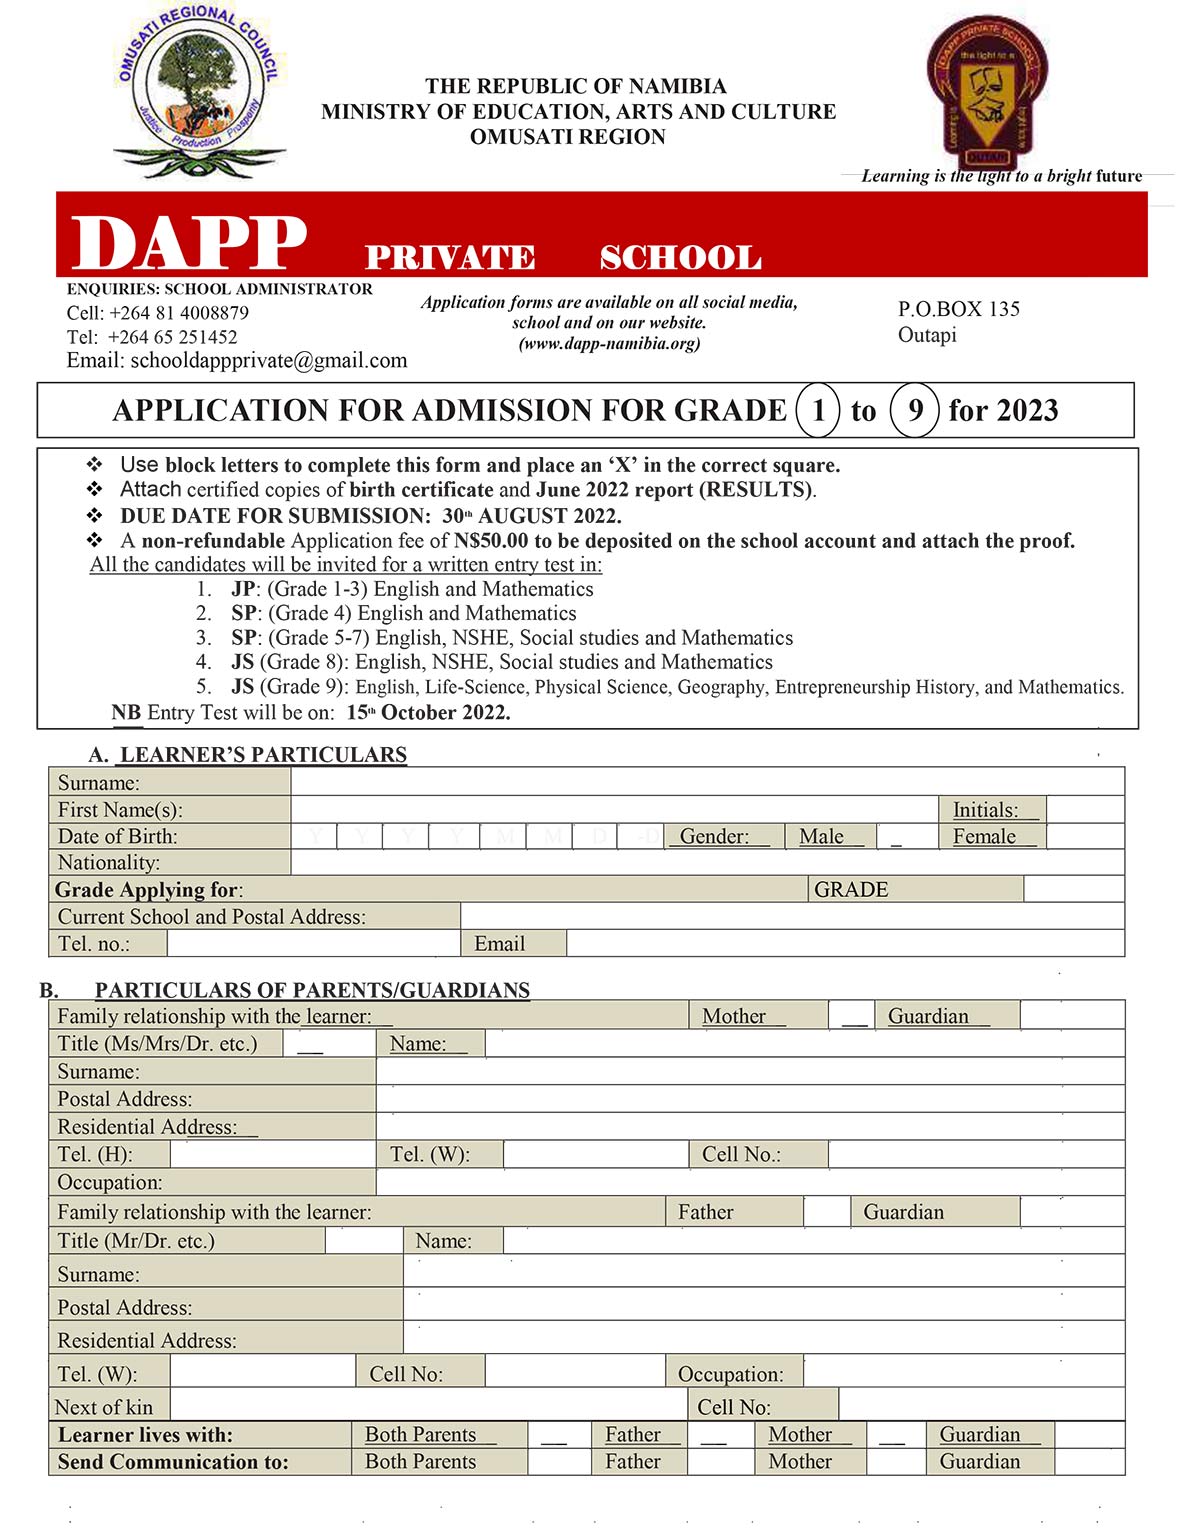 DAPP Private School Application Form for 2023 web 1